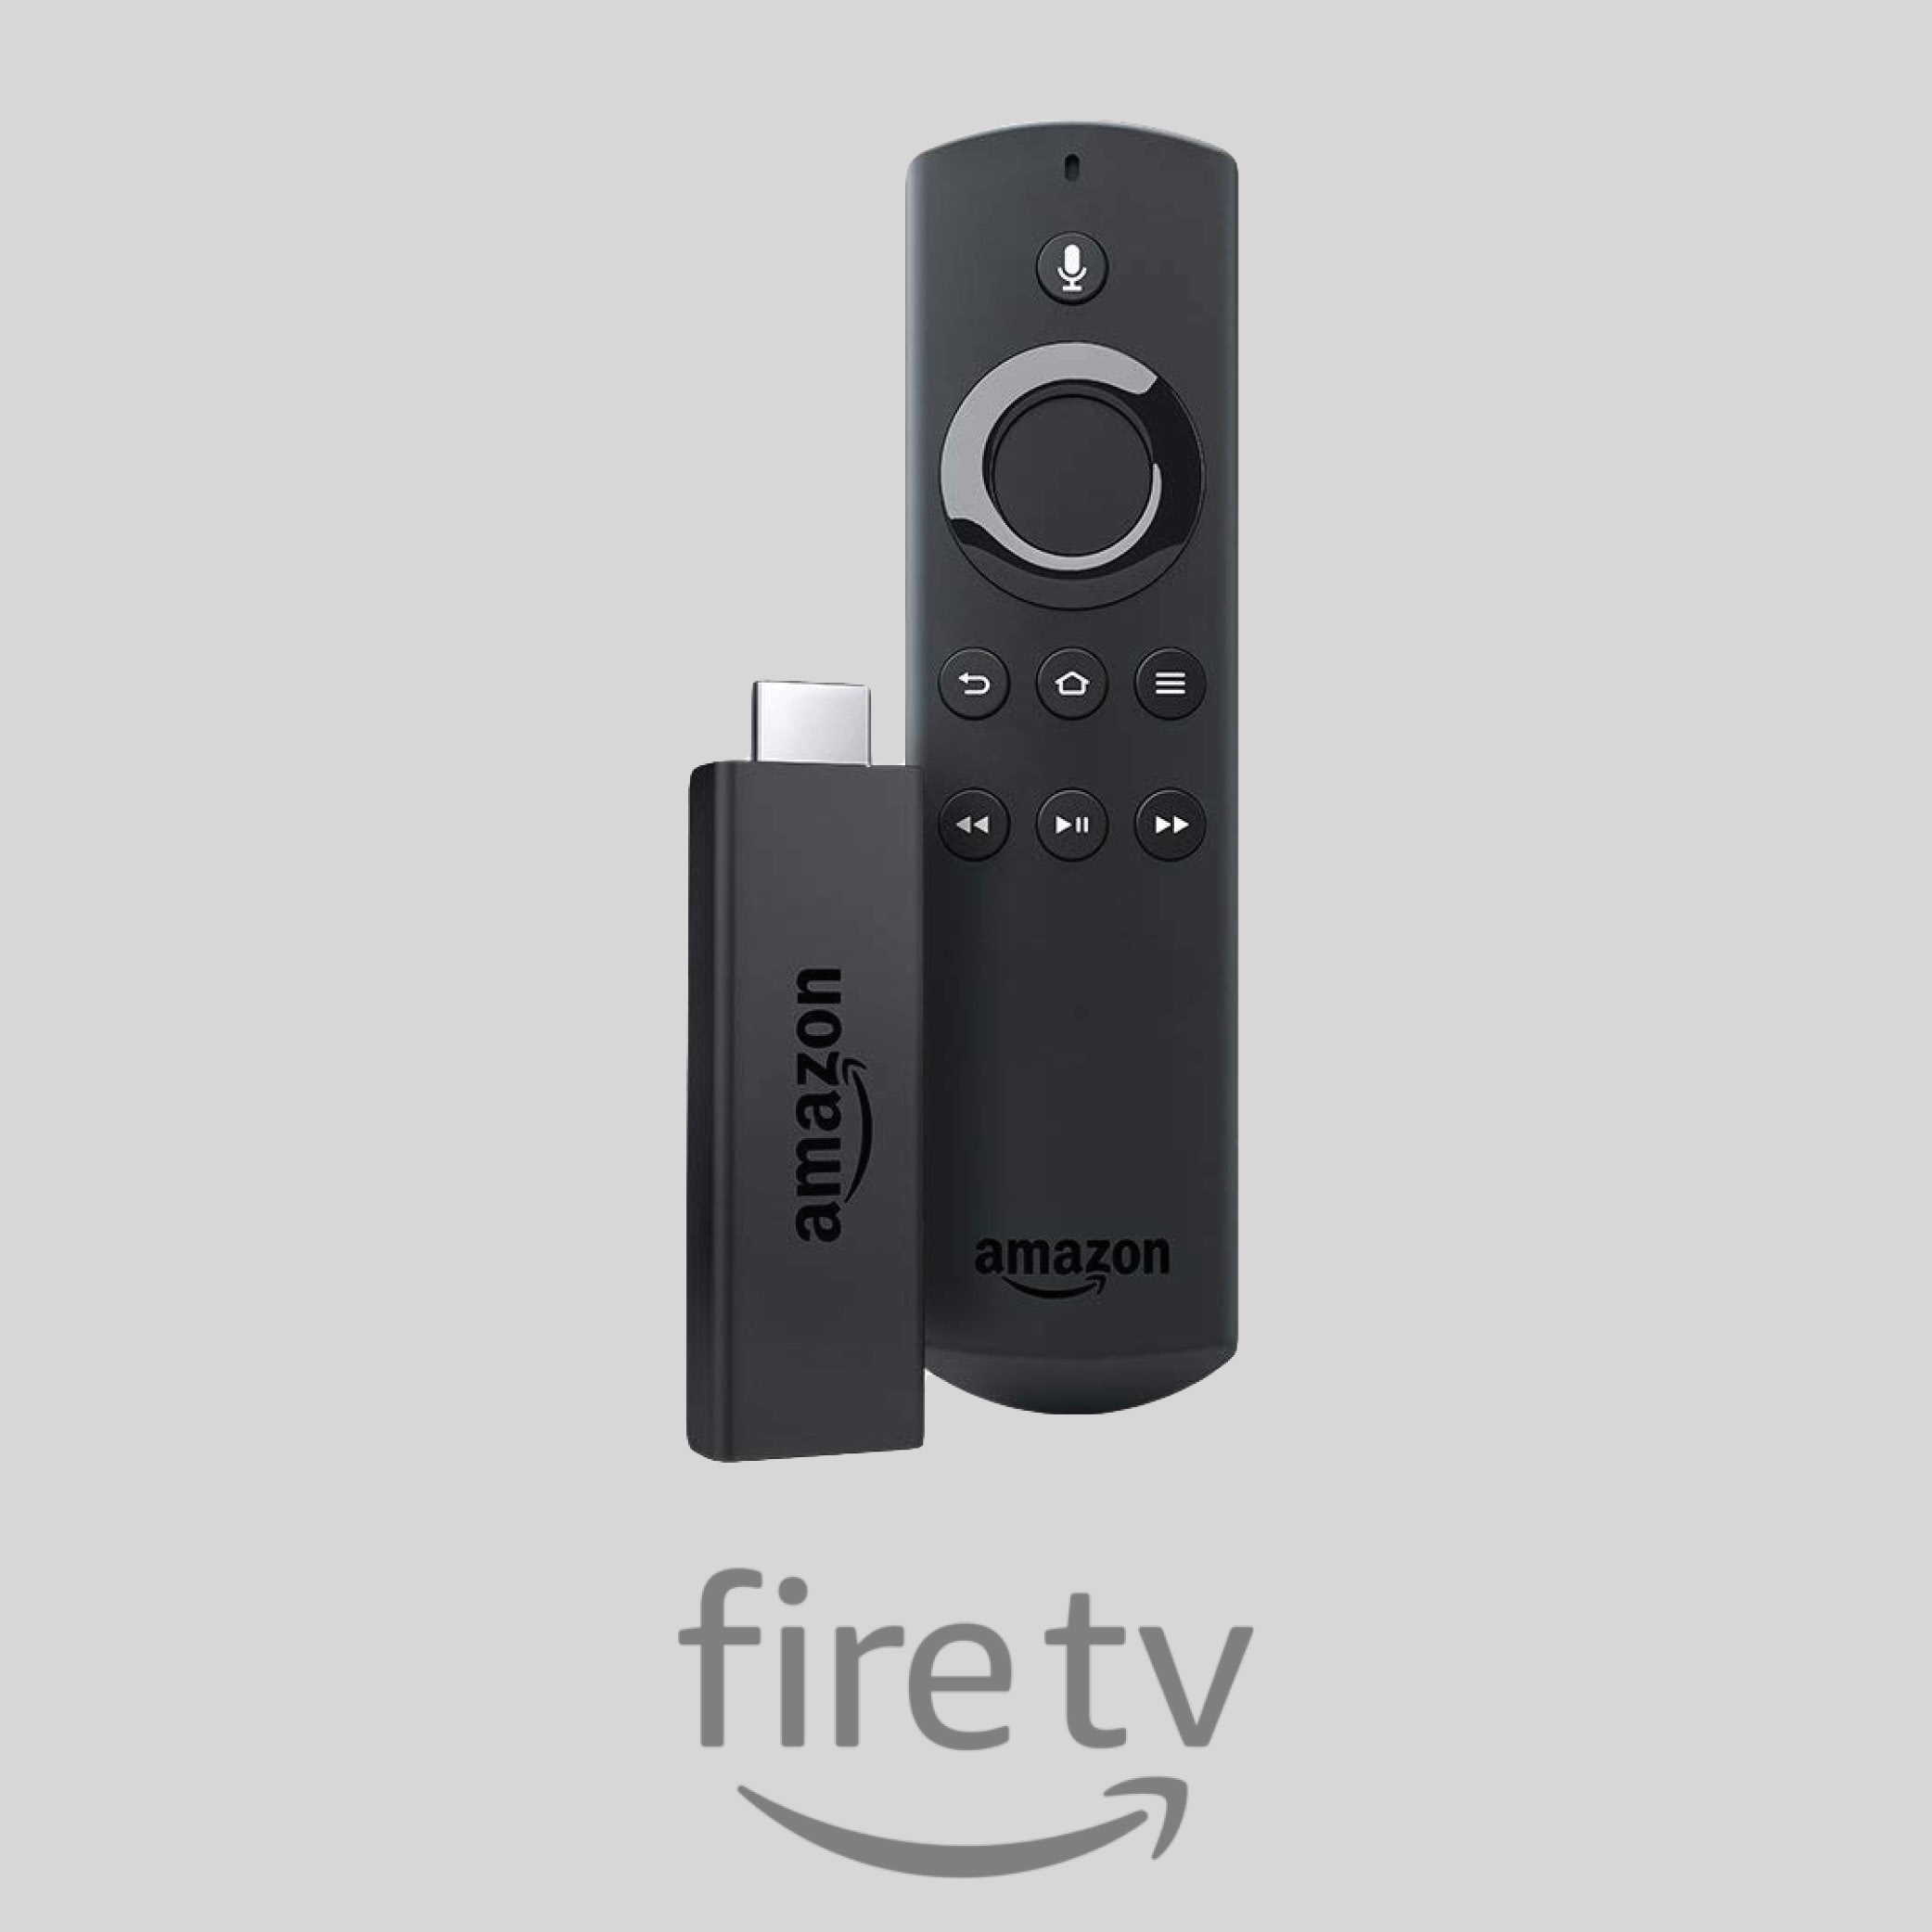 Stream using Amazon Fire TV